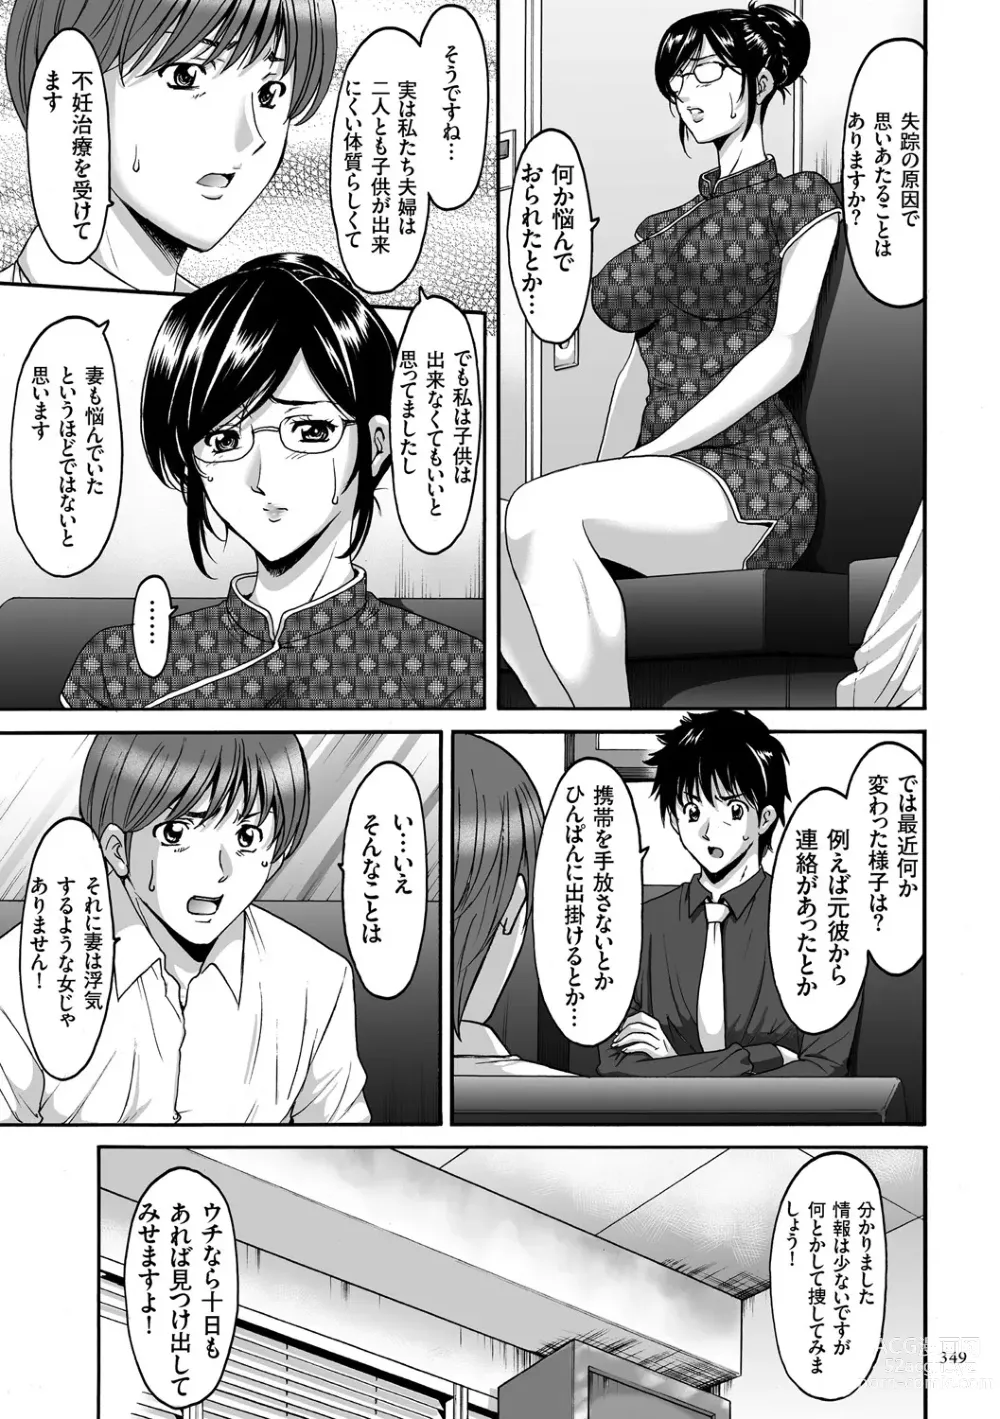 Page 349 of manga Sennyu Tsuma Satomi Kiroku